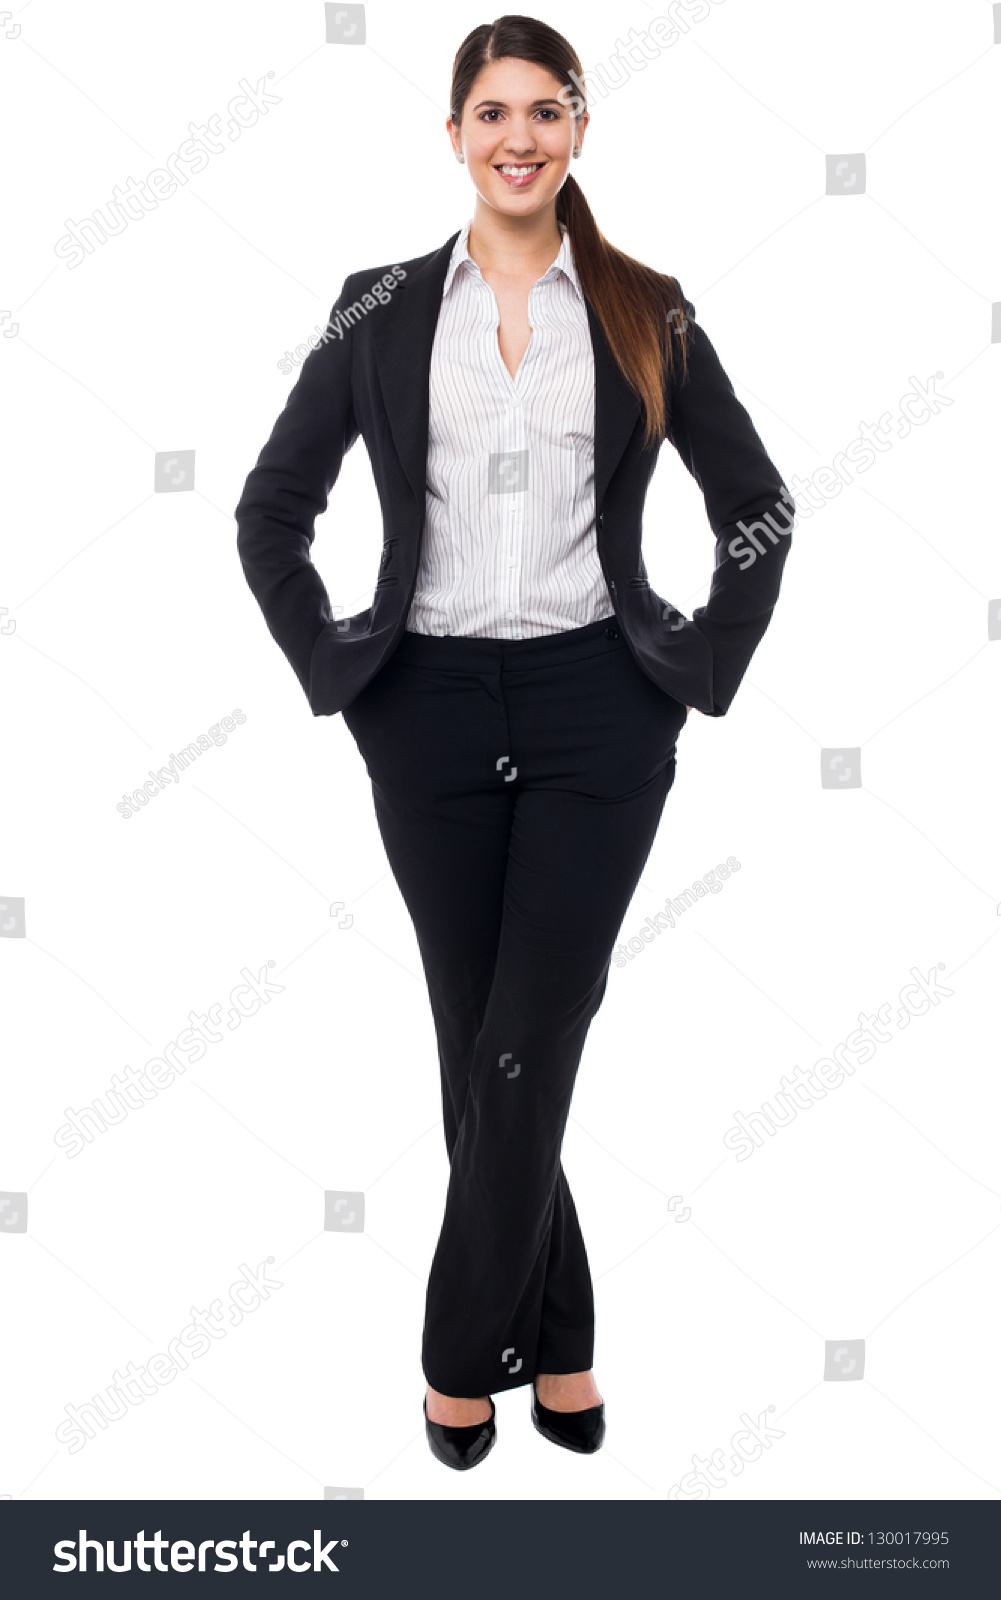 young female professional attire